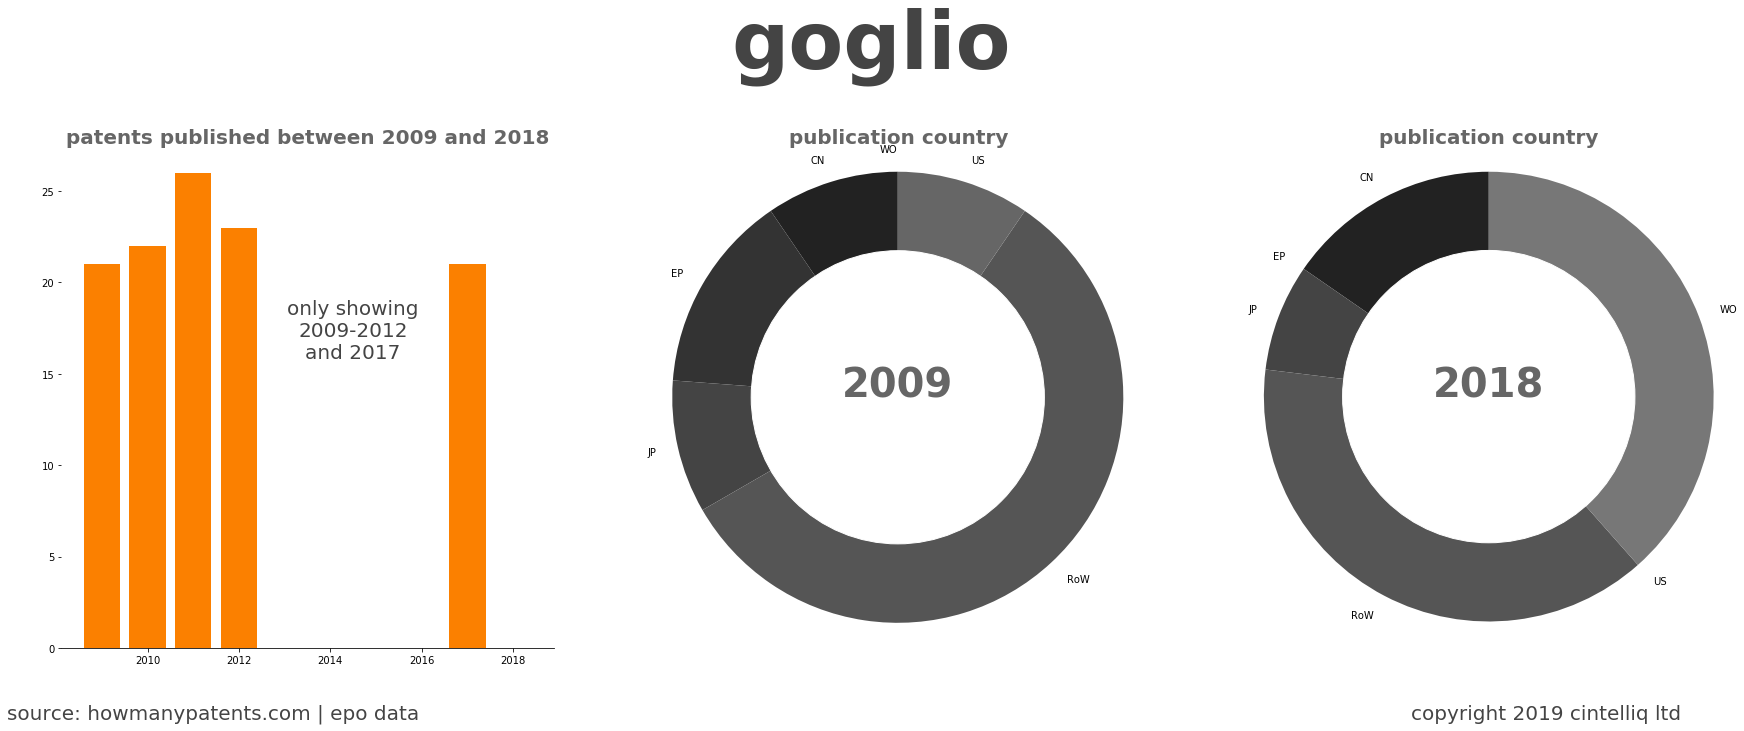 summary of patents for Goglio